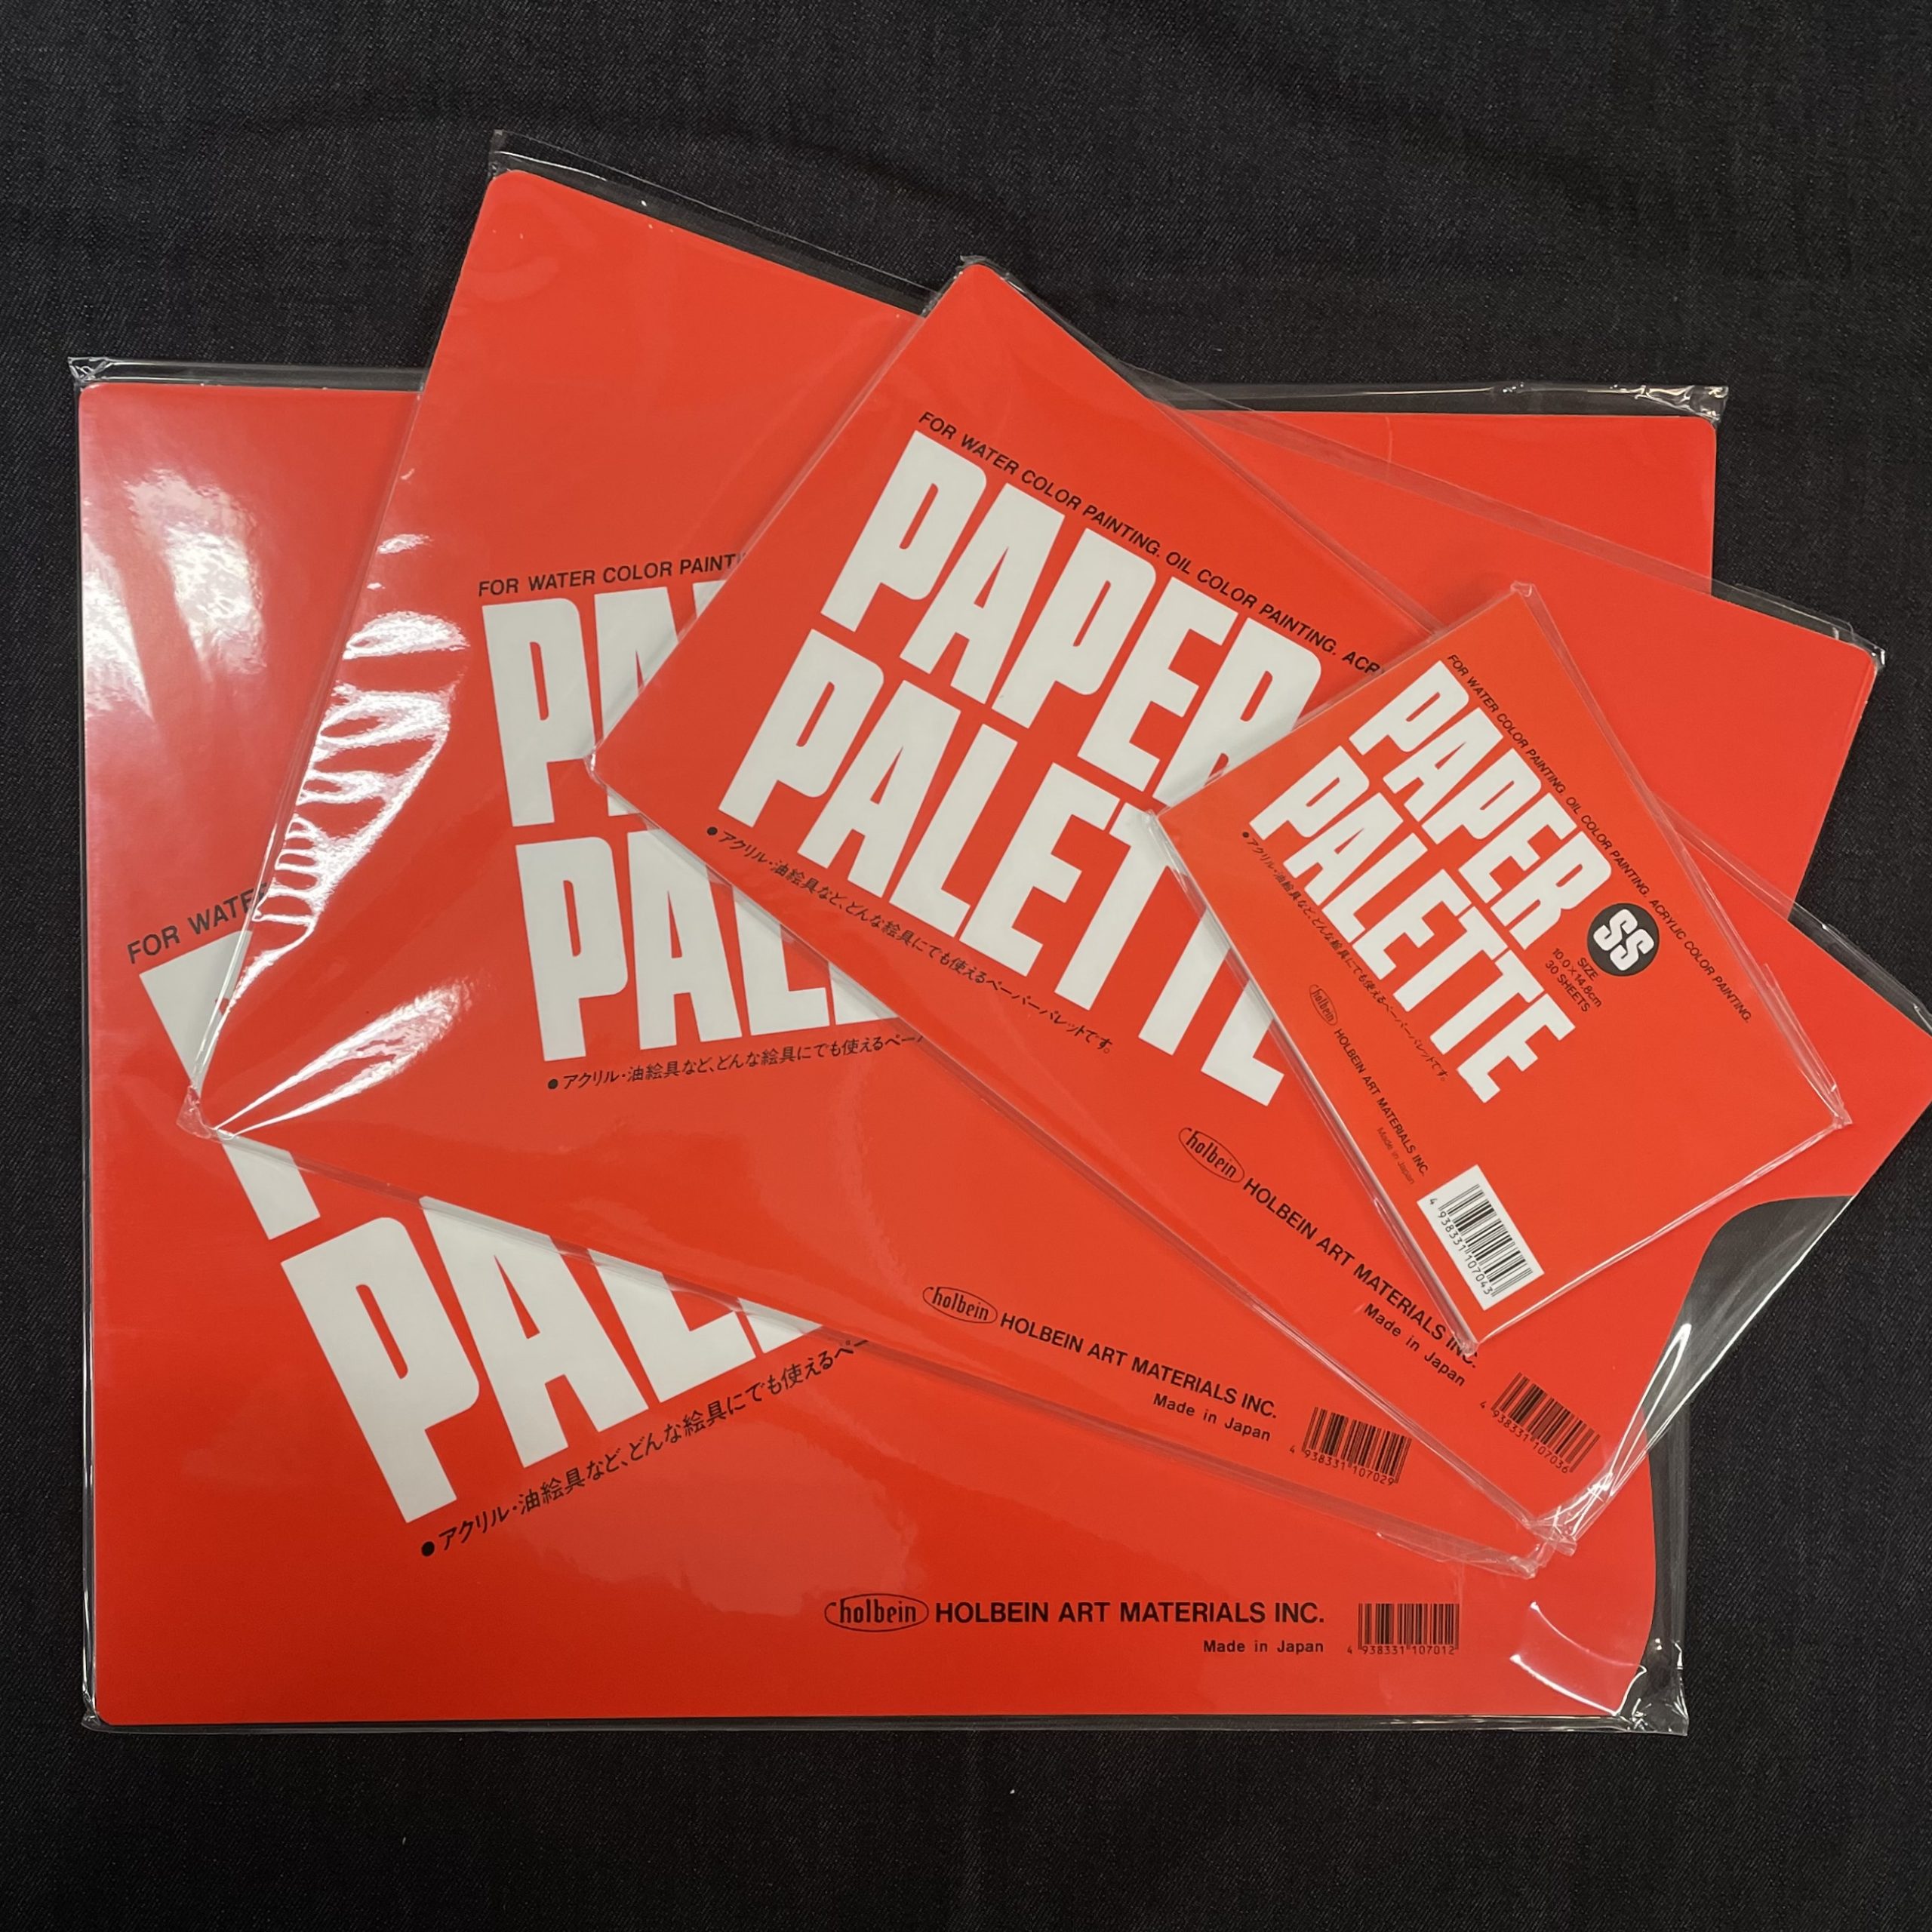 Palette Paper | artPOP!